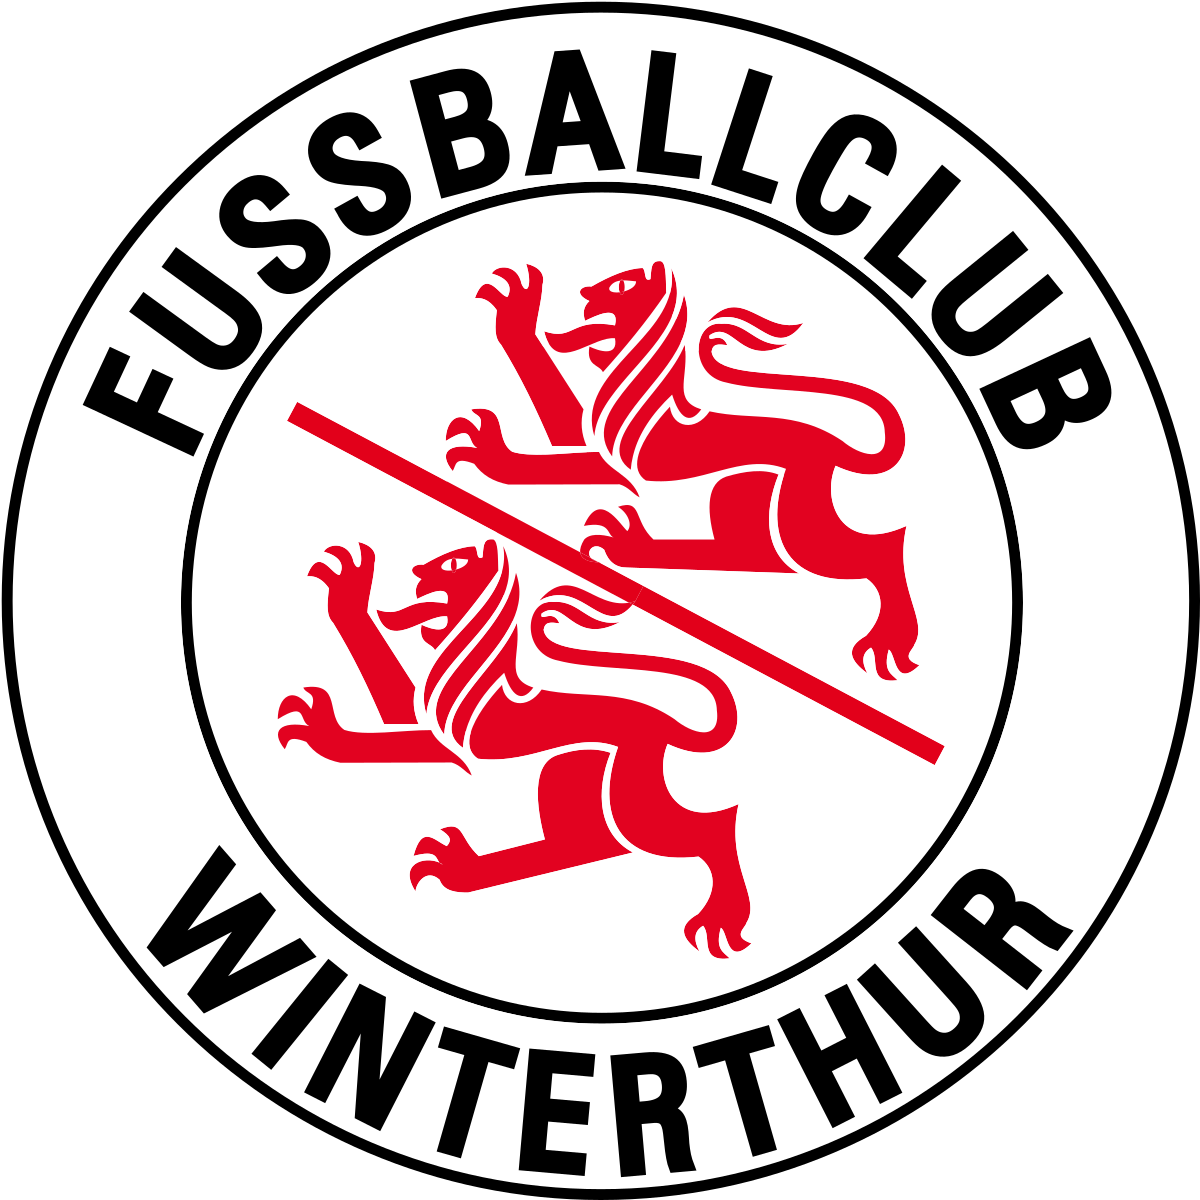 Winterthur vs Servette Prediction: A tough match is expected